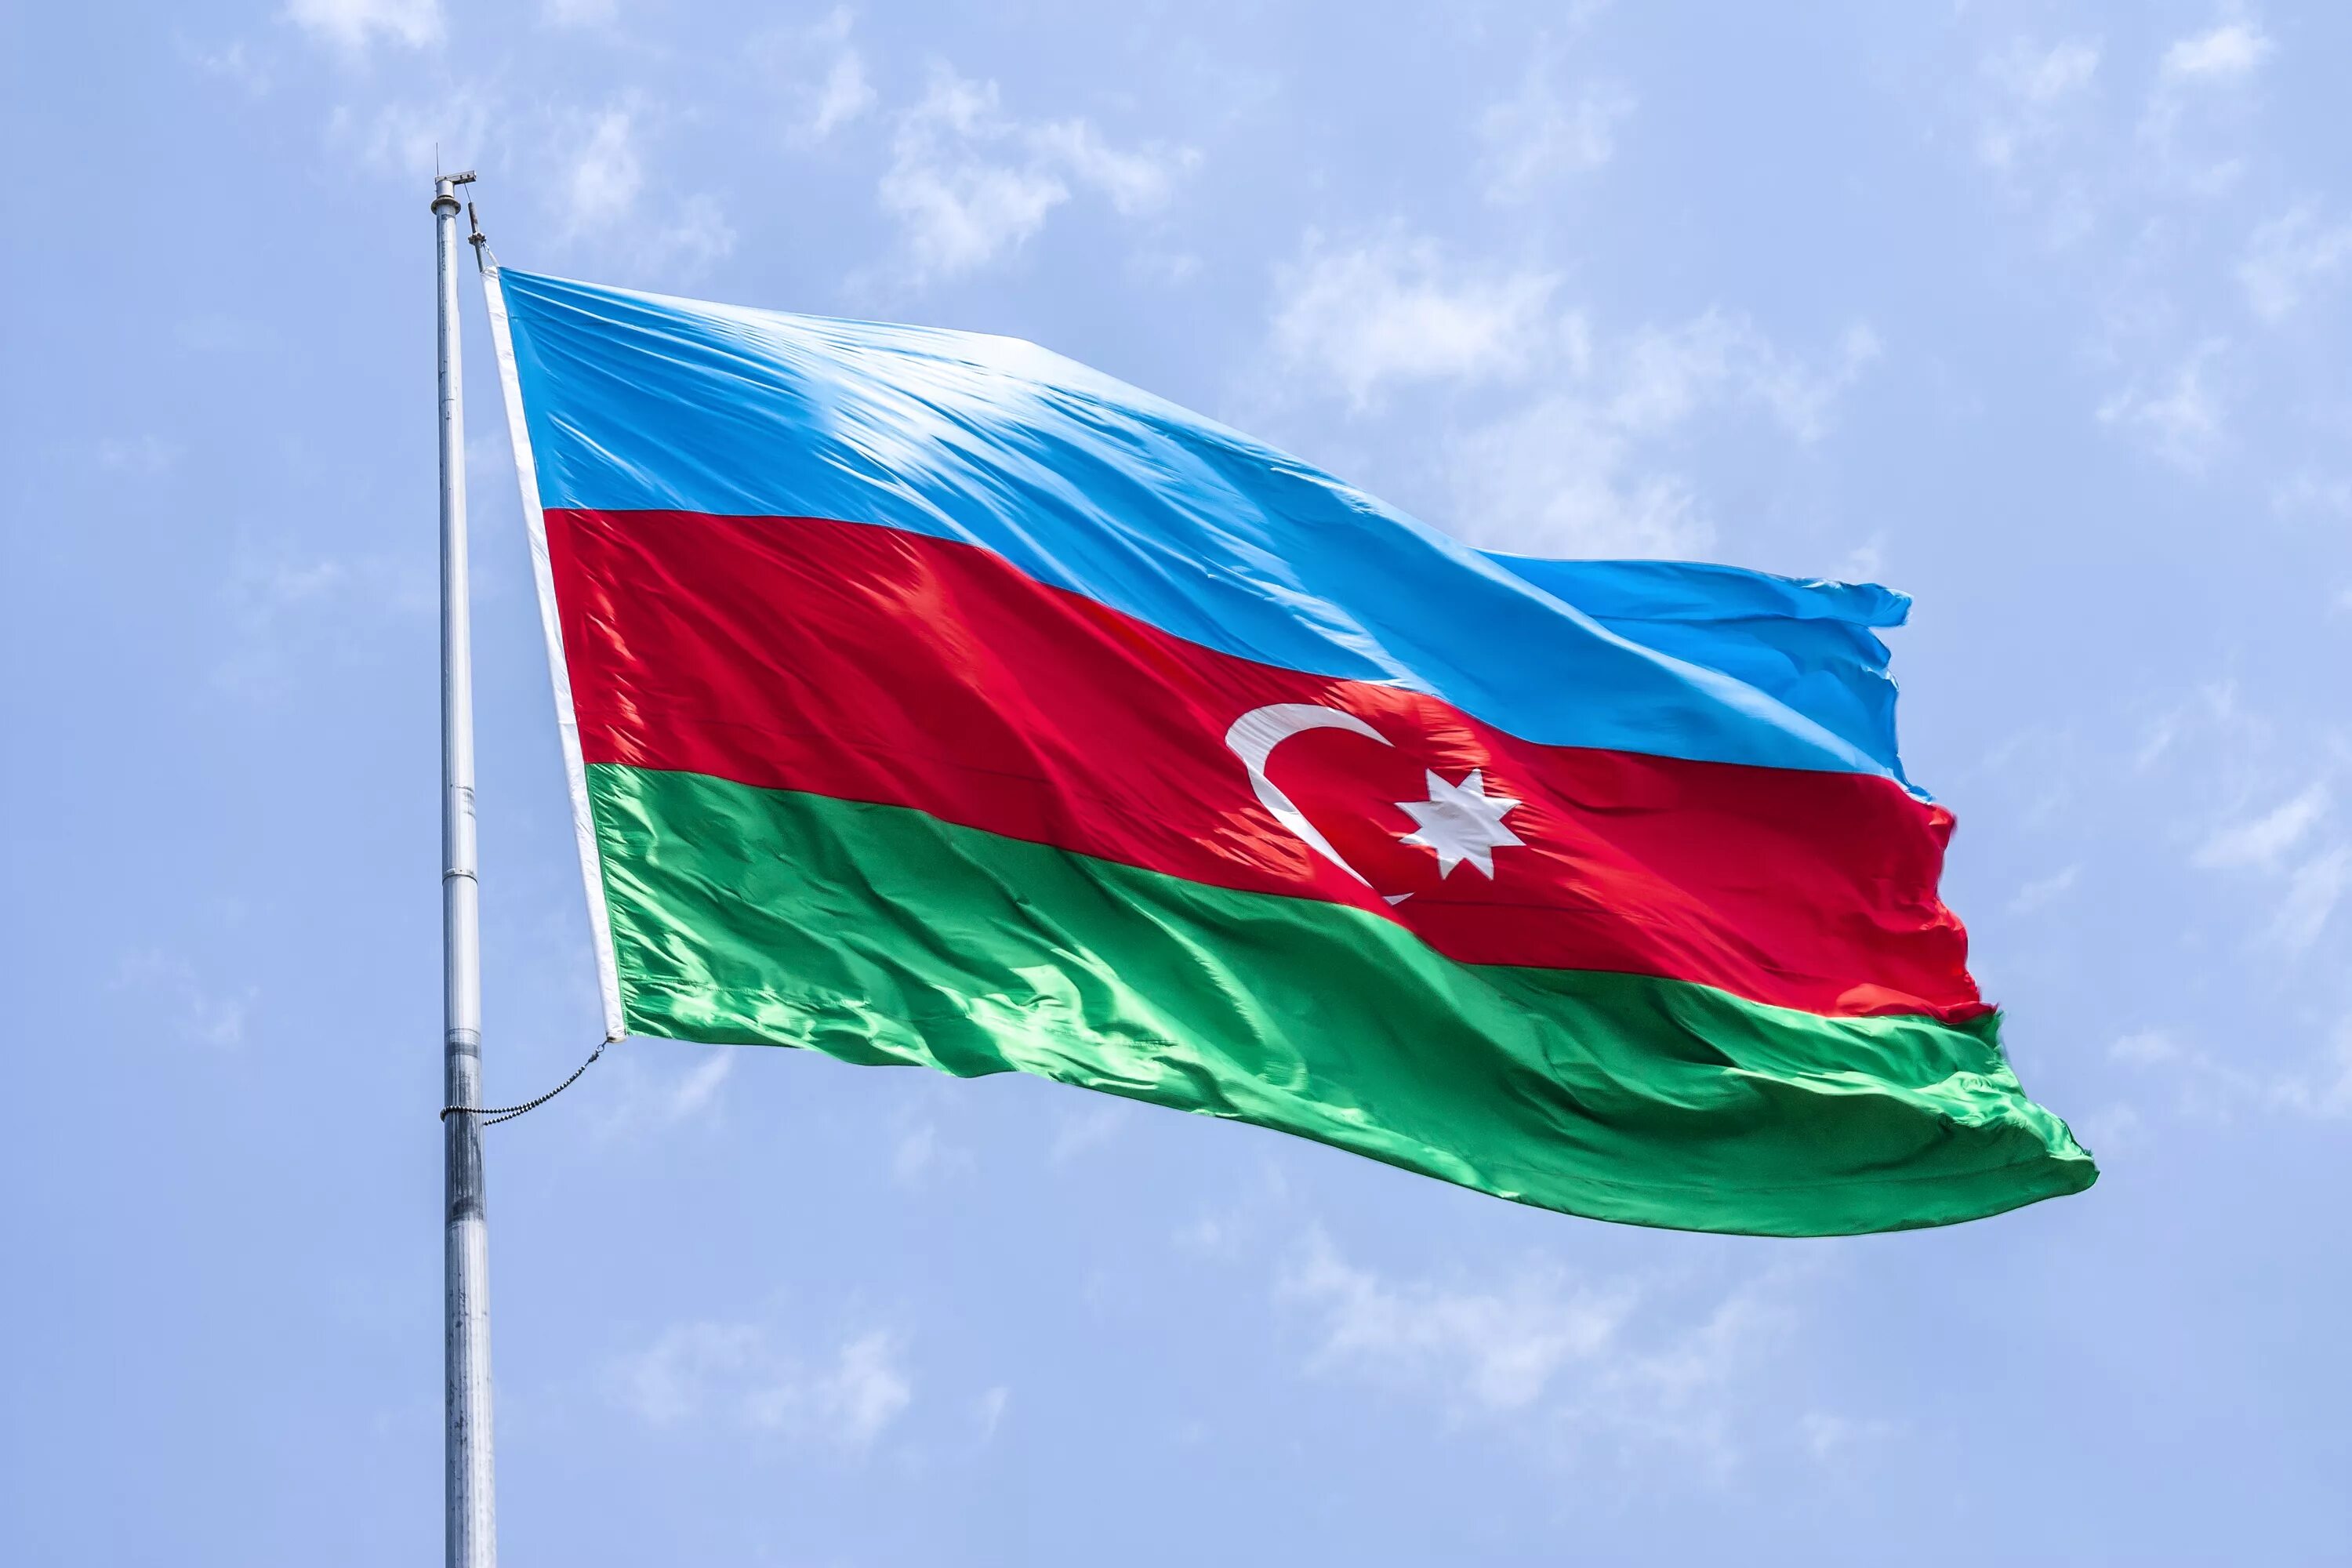 Azeri 2. Флаг Азербайджана. Флаг азербайджанской Республики. Гос флаг Азербайджана.